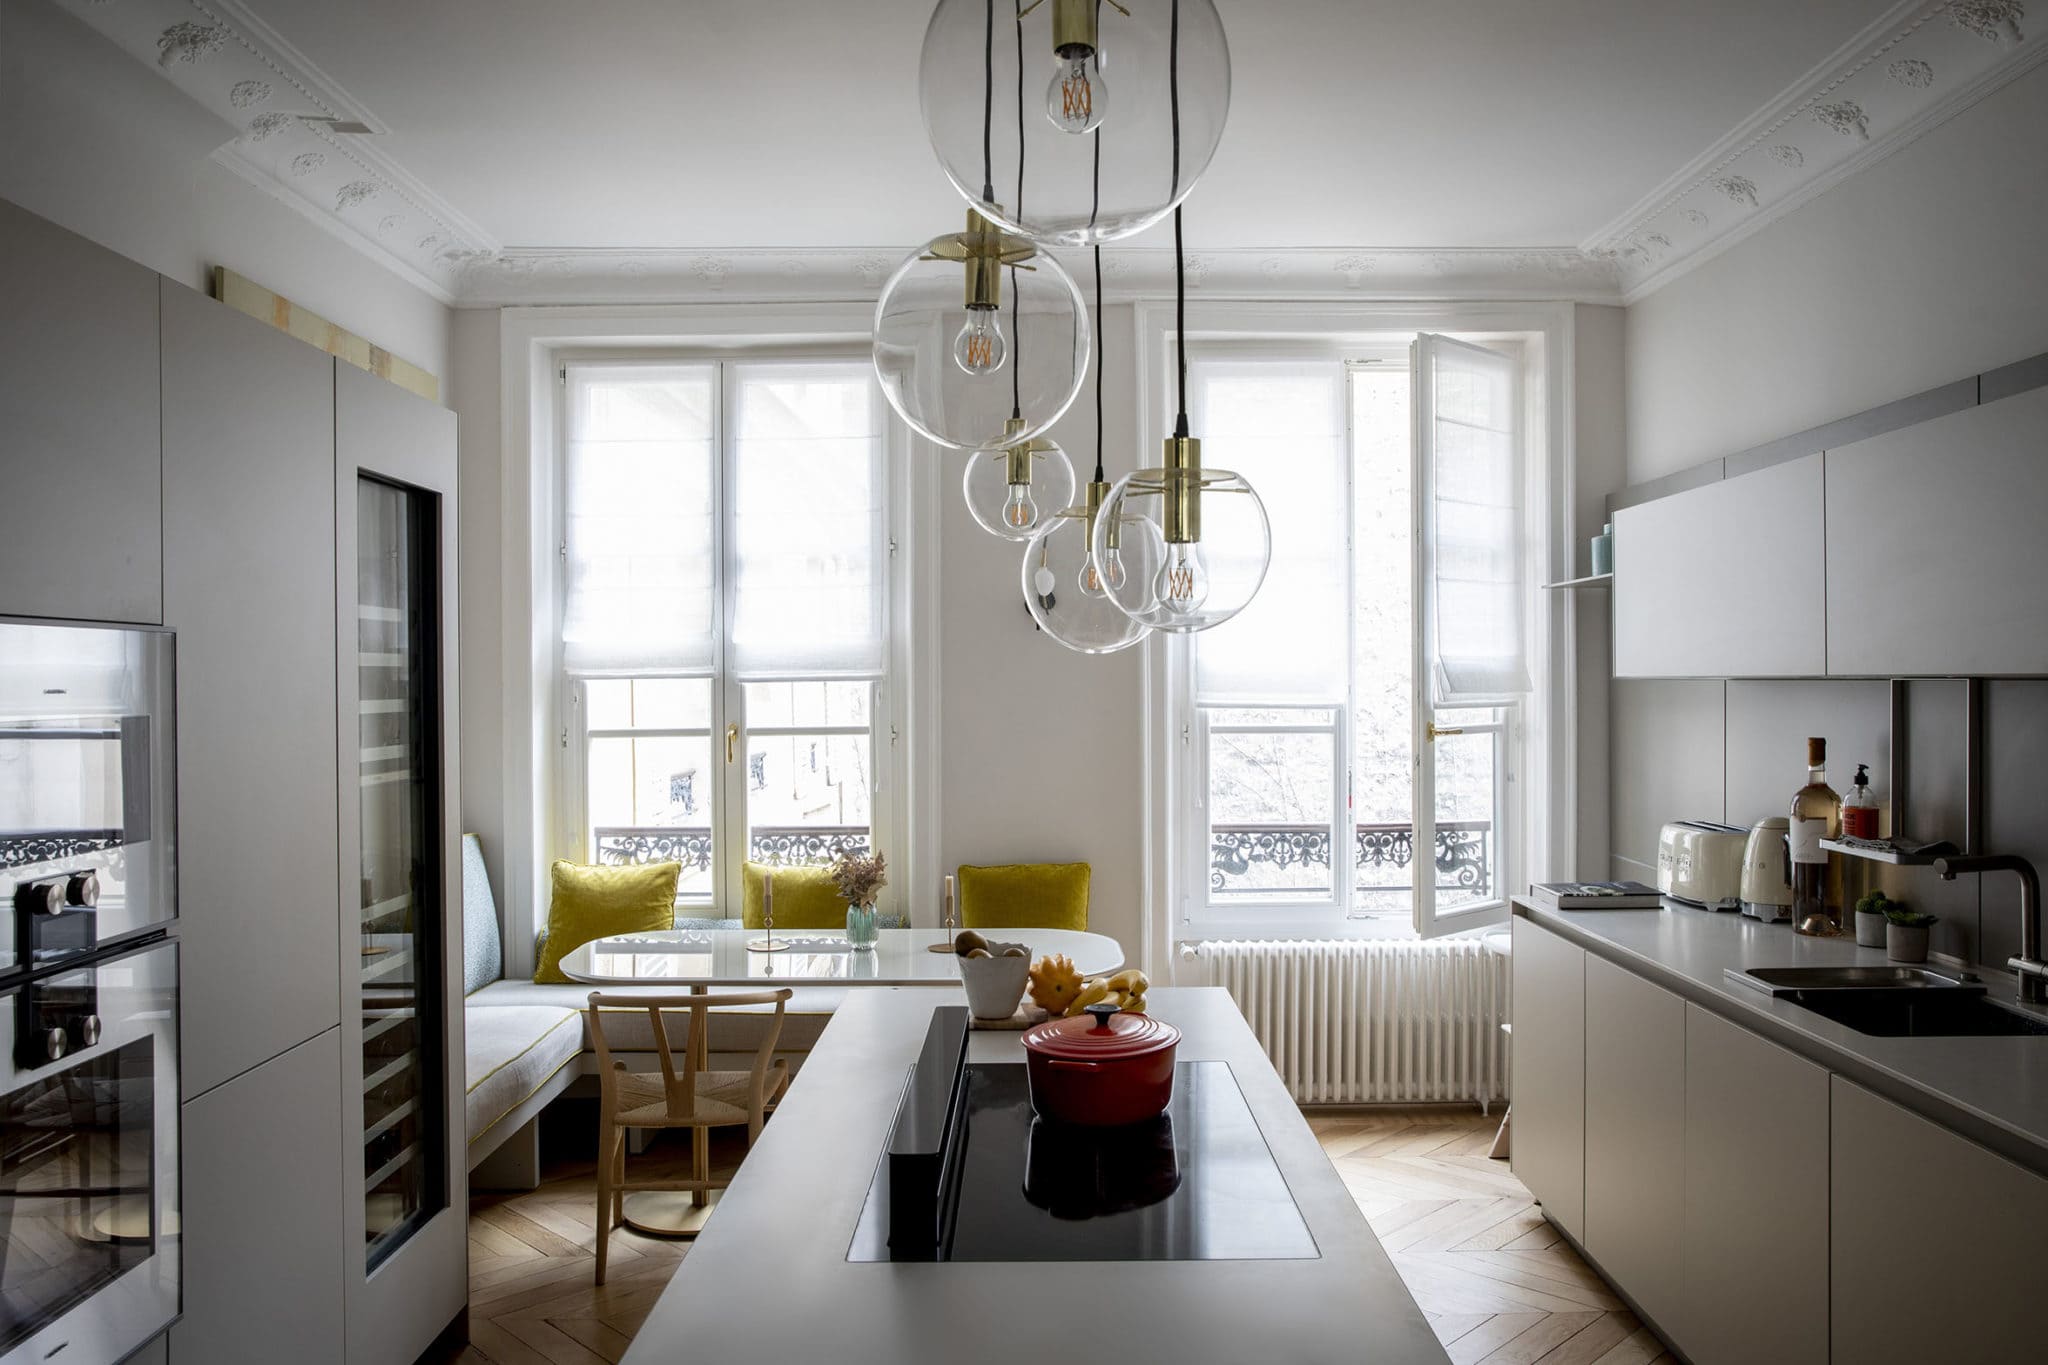 Lighting design for a high-end kitchen